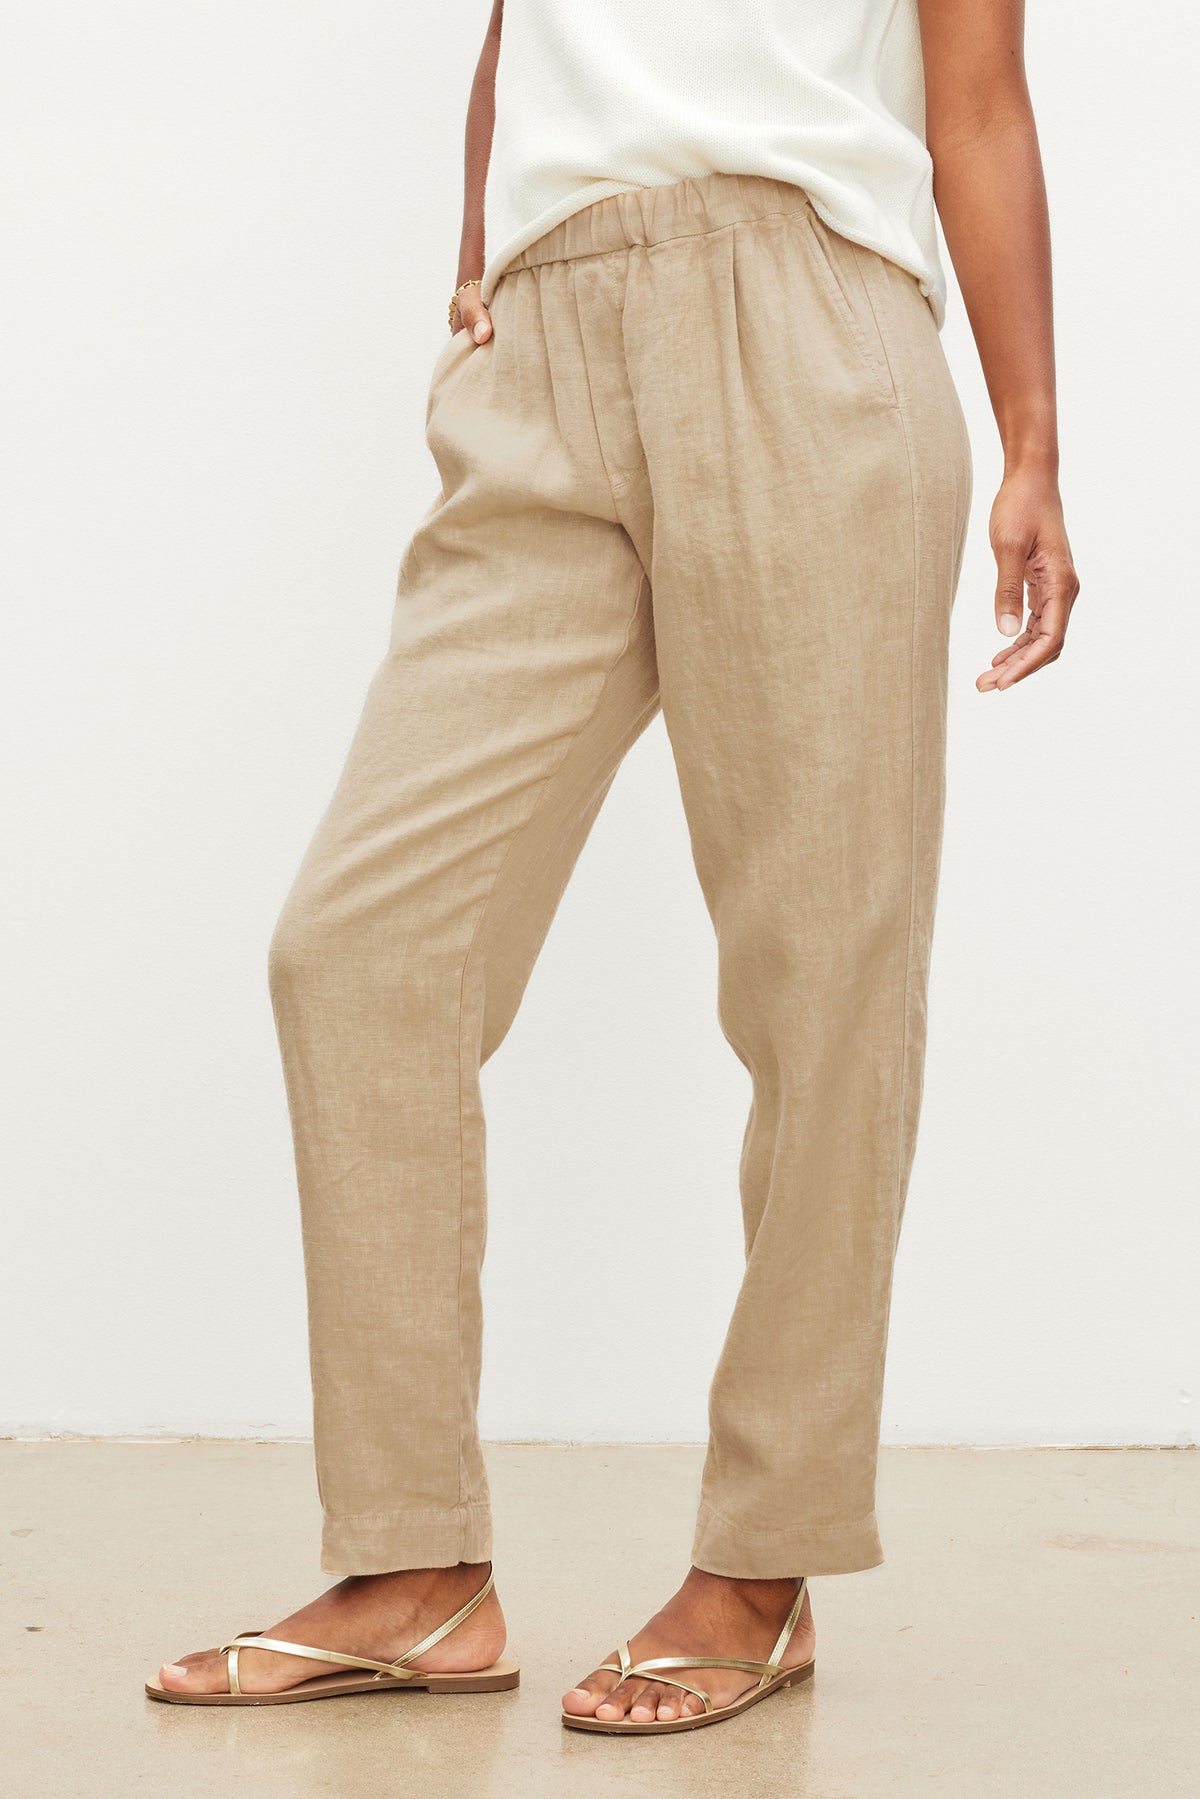 Standards Chino Pants | Calvin Klein | Calvin klein, Chinos pants, Chino